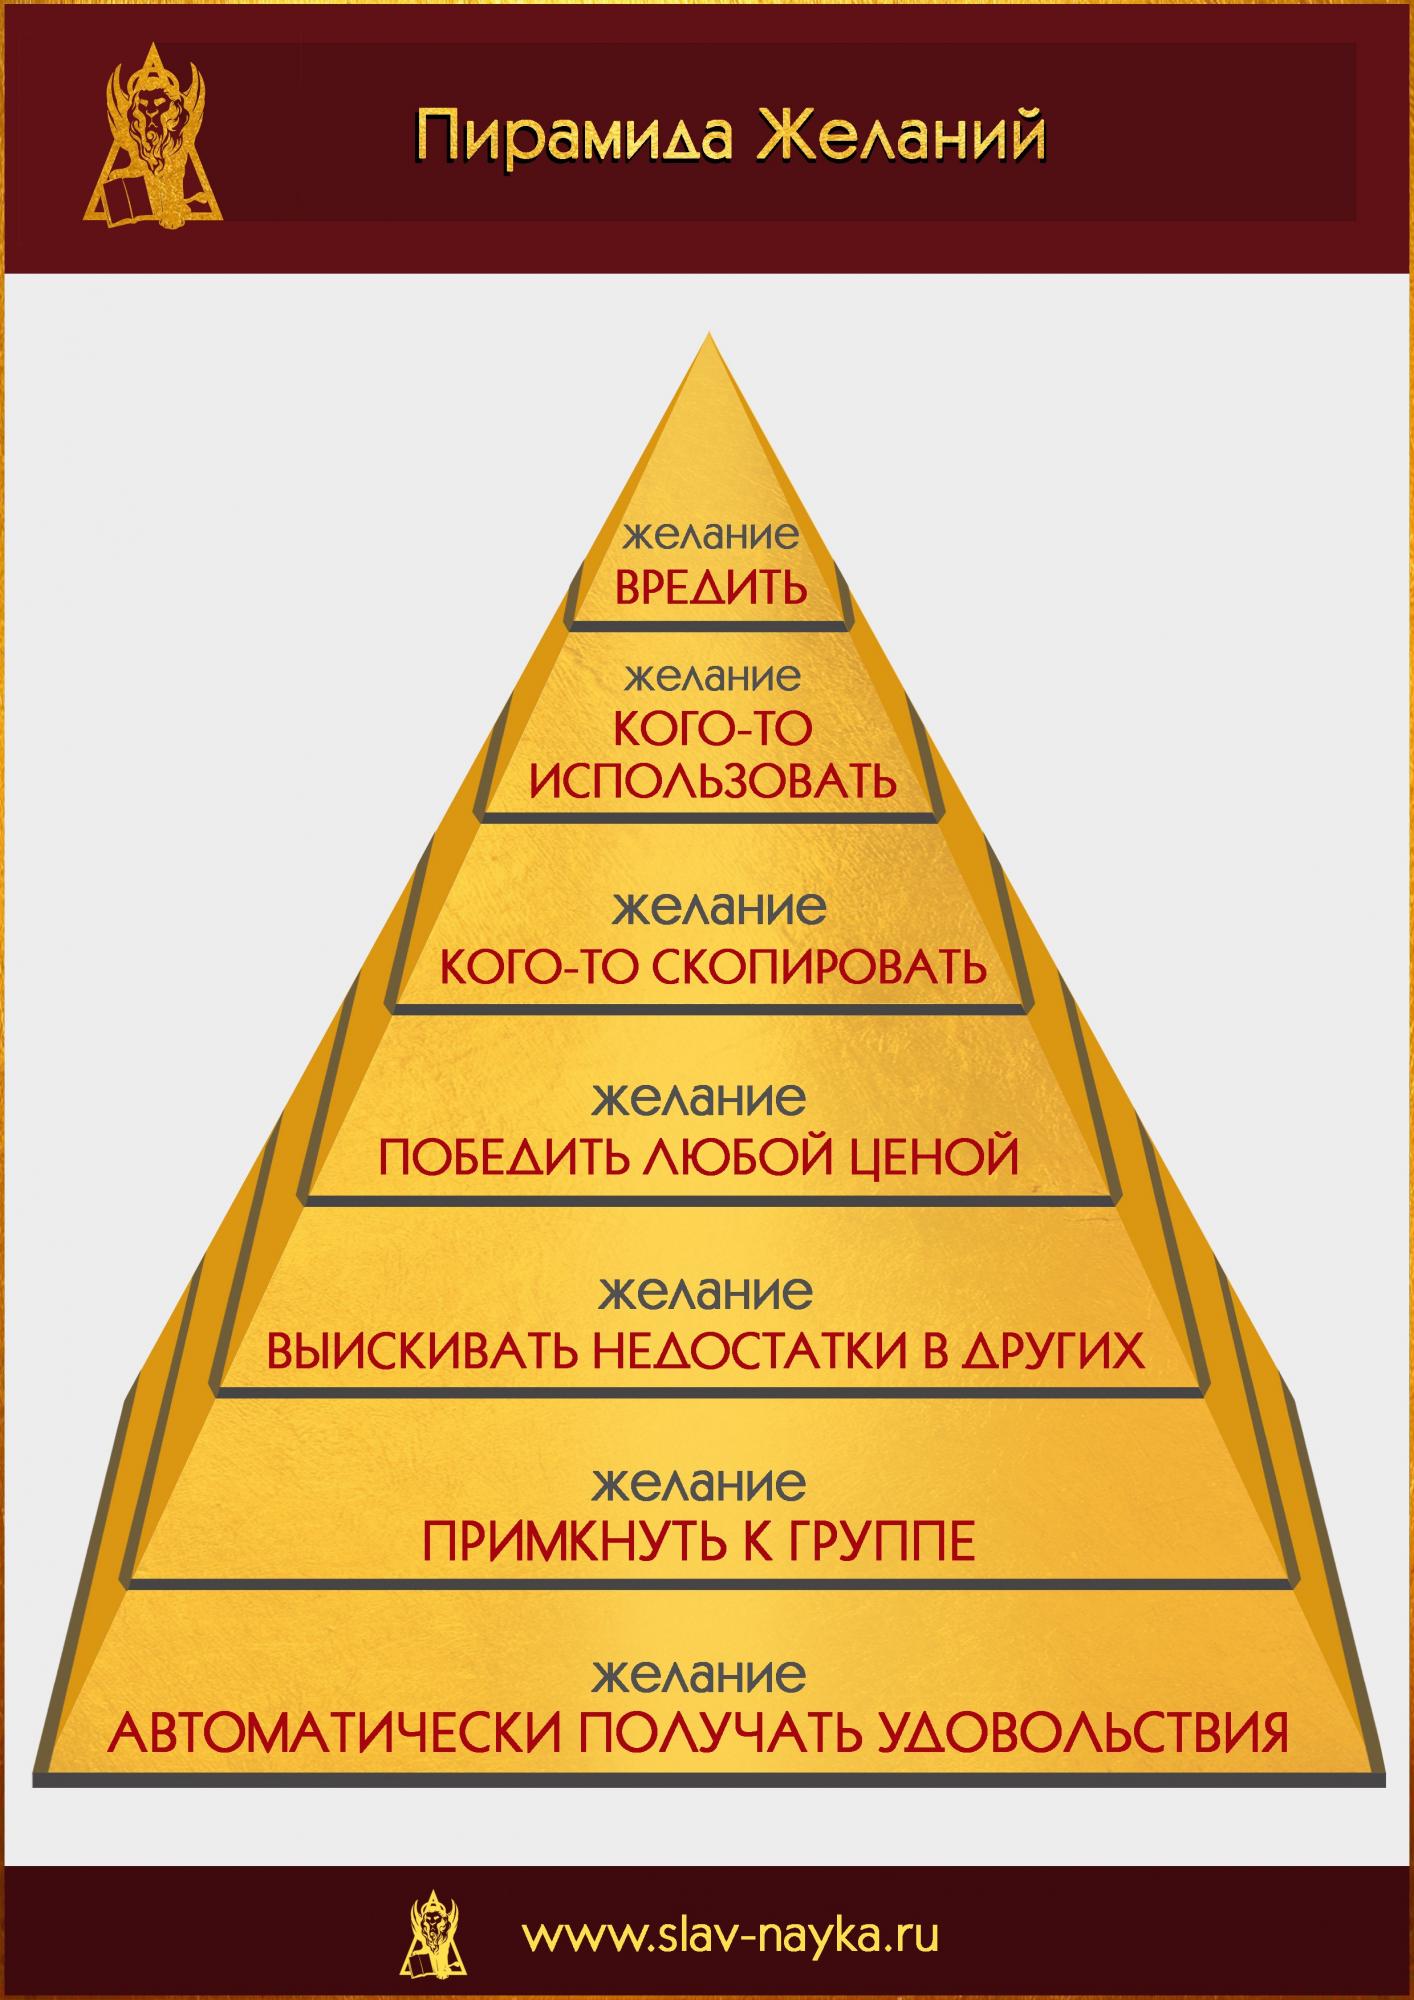 Пирамида желаний